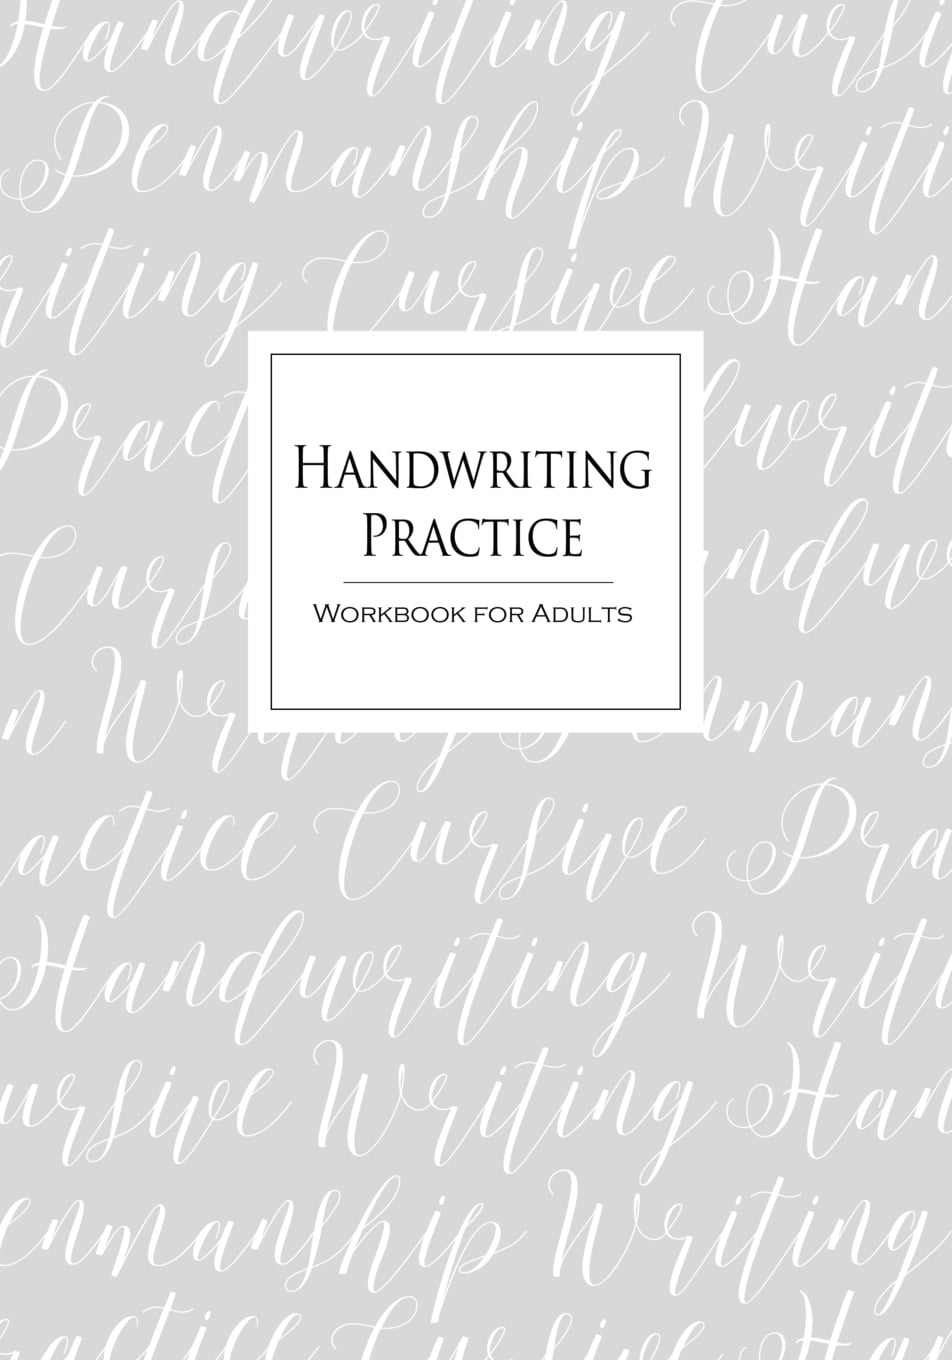 Handwriting Practice Workbook for Adults: Cursive Writing Penmanship